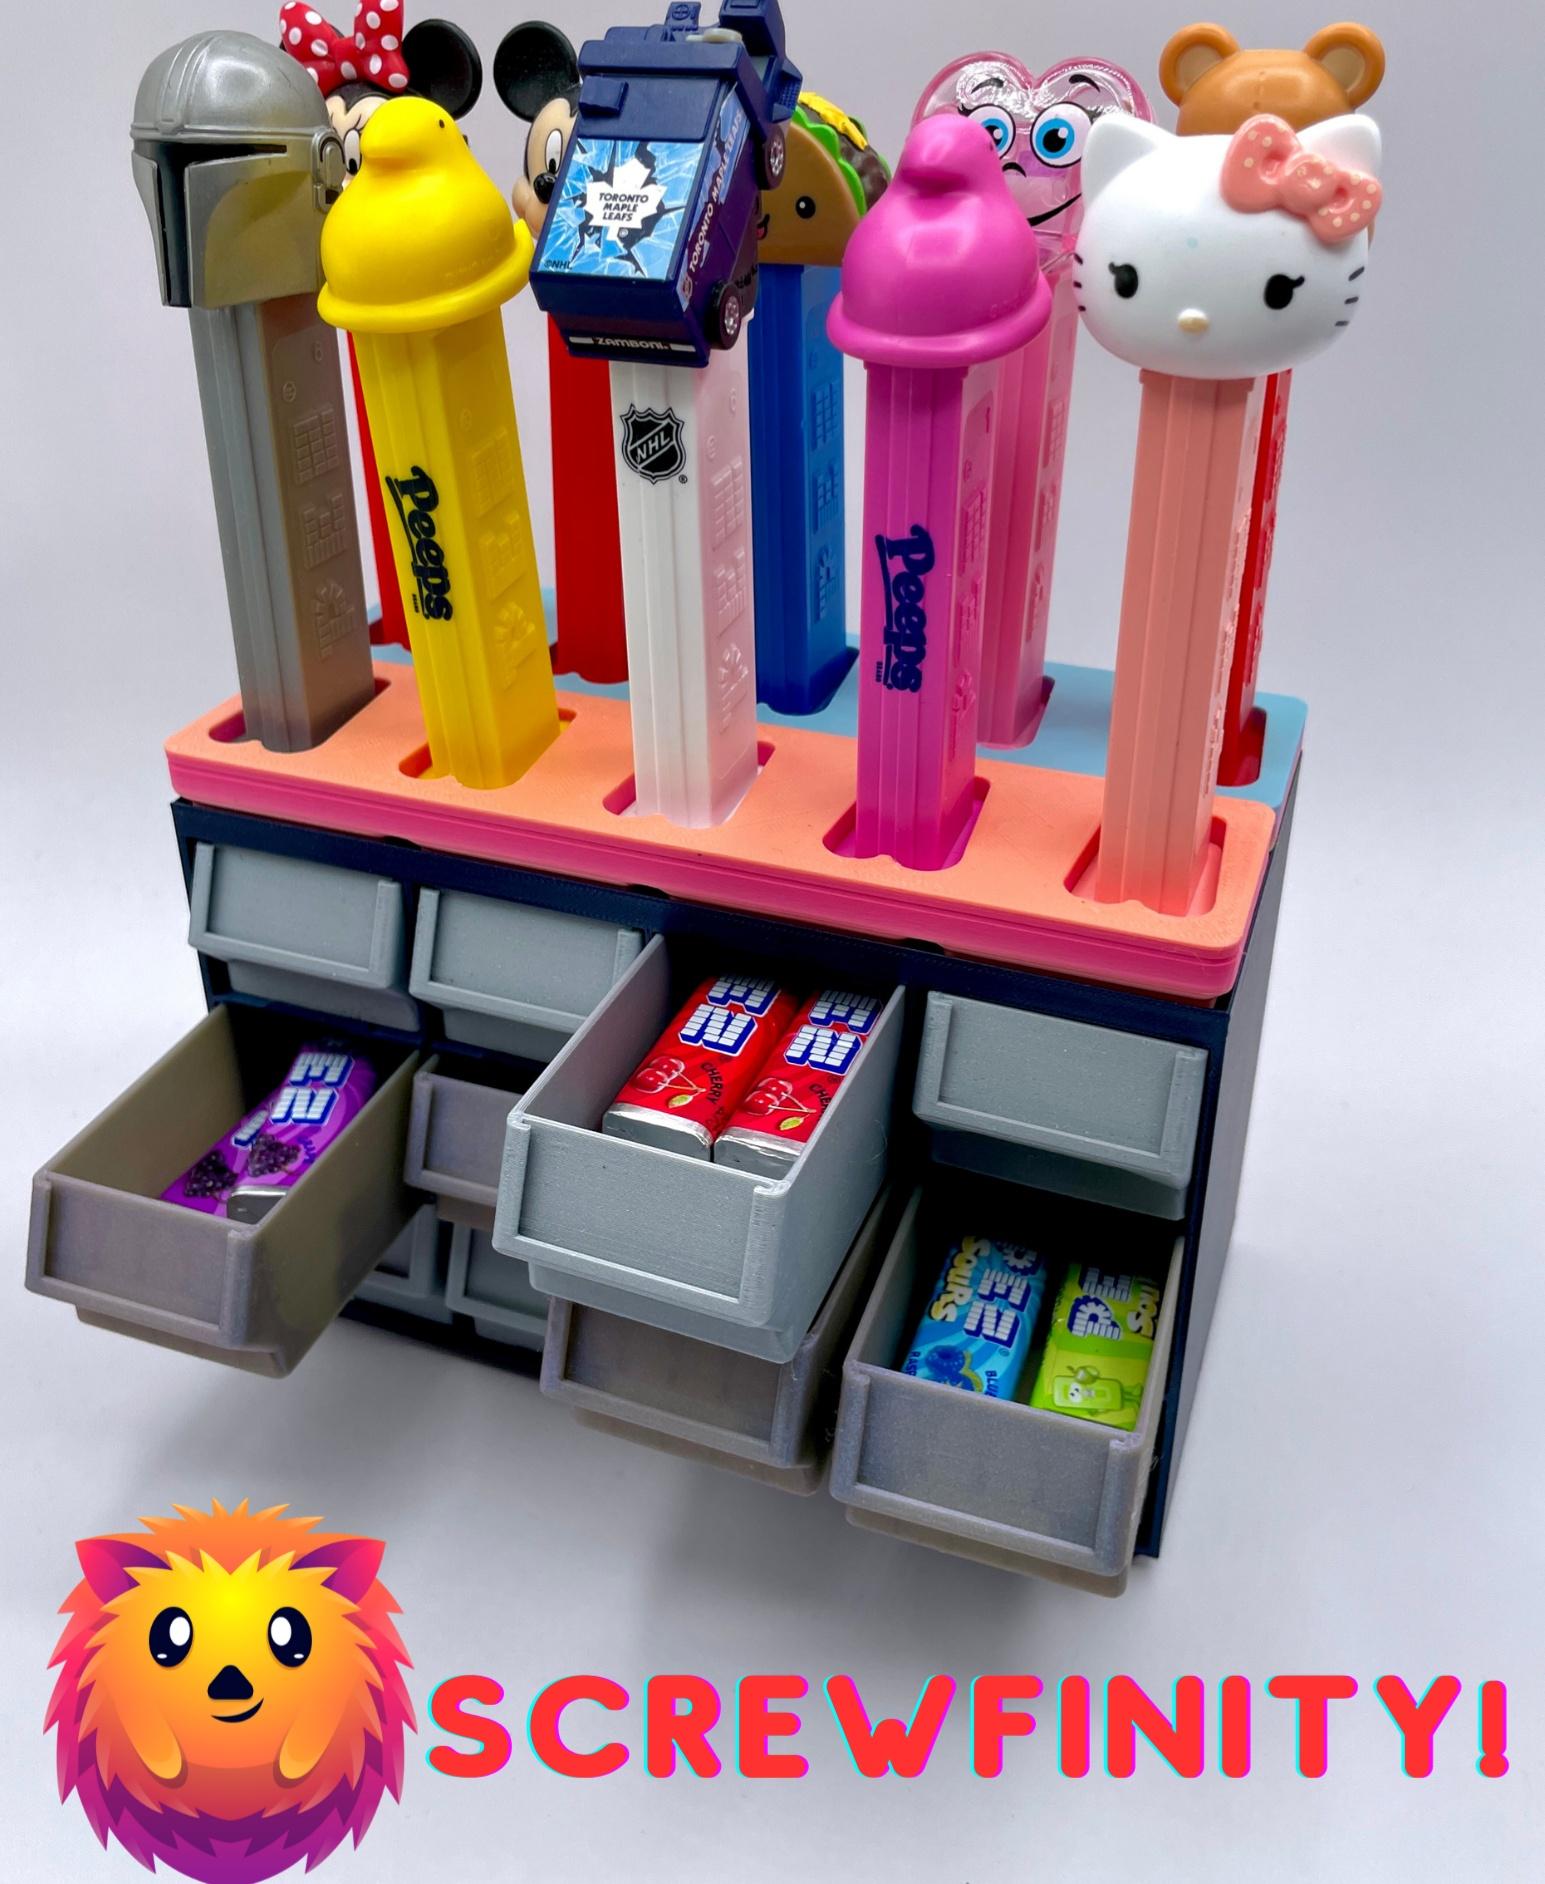 Screwfinity Unit 2U Medium  - Finally, a place to store my PEZ candy! - 3d model